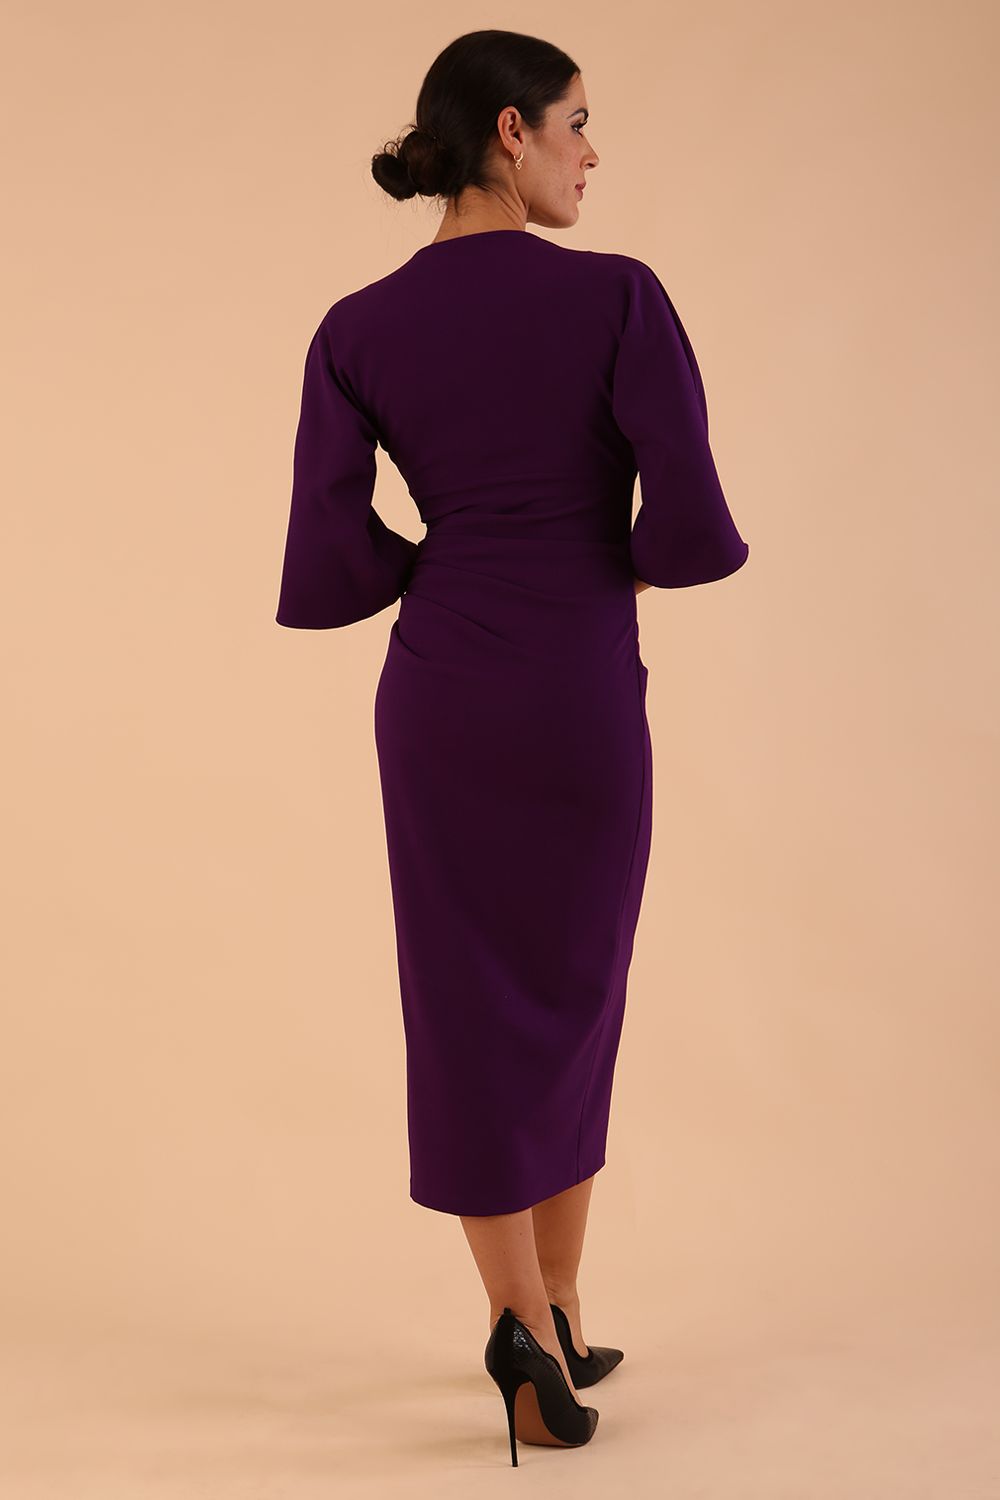 Model wearing diva catwalk Diana Cowl Neck pencil skirt dress in purple